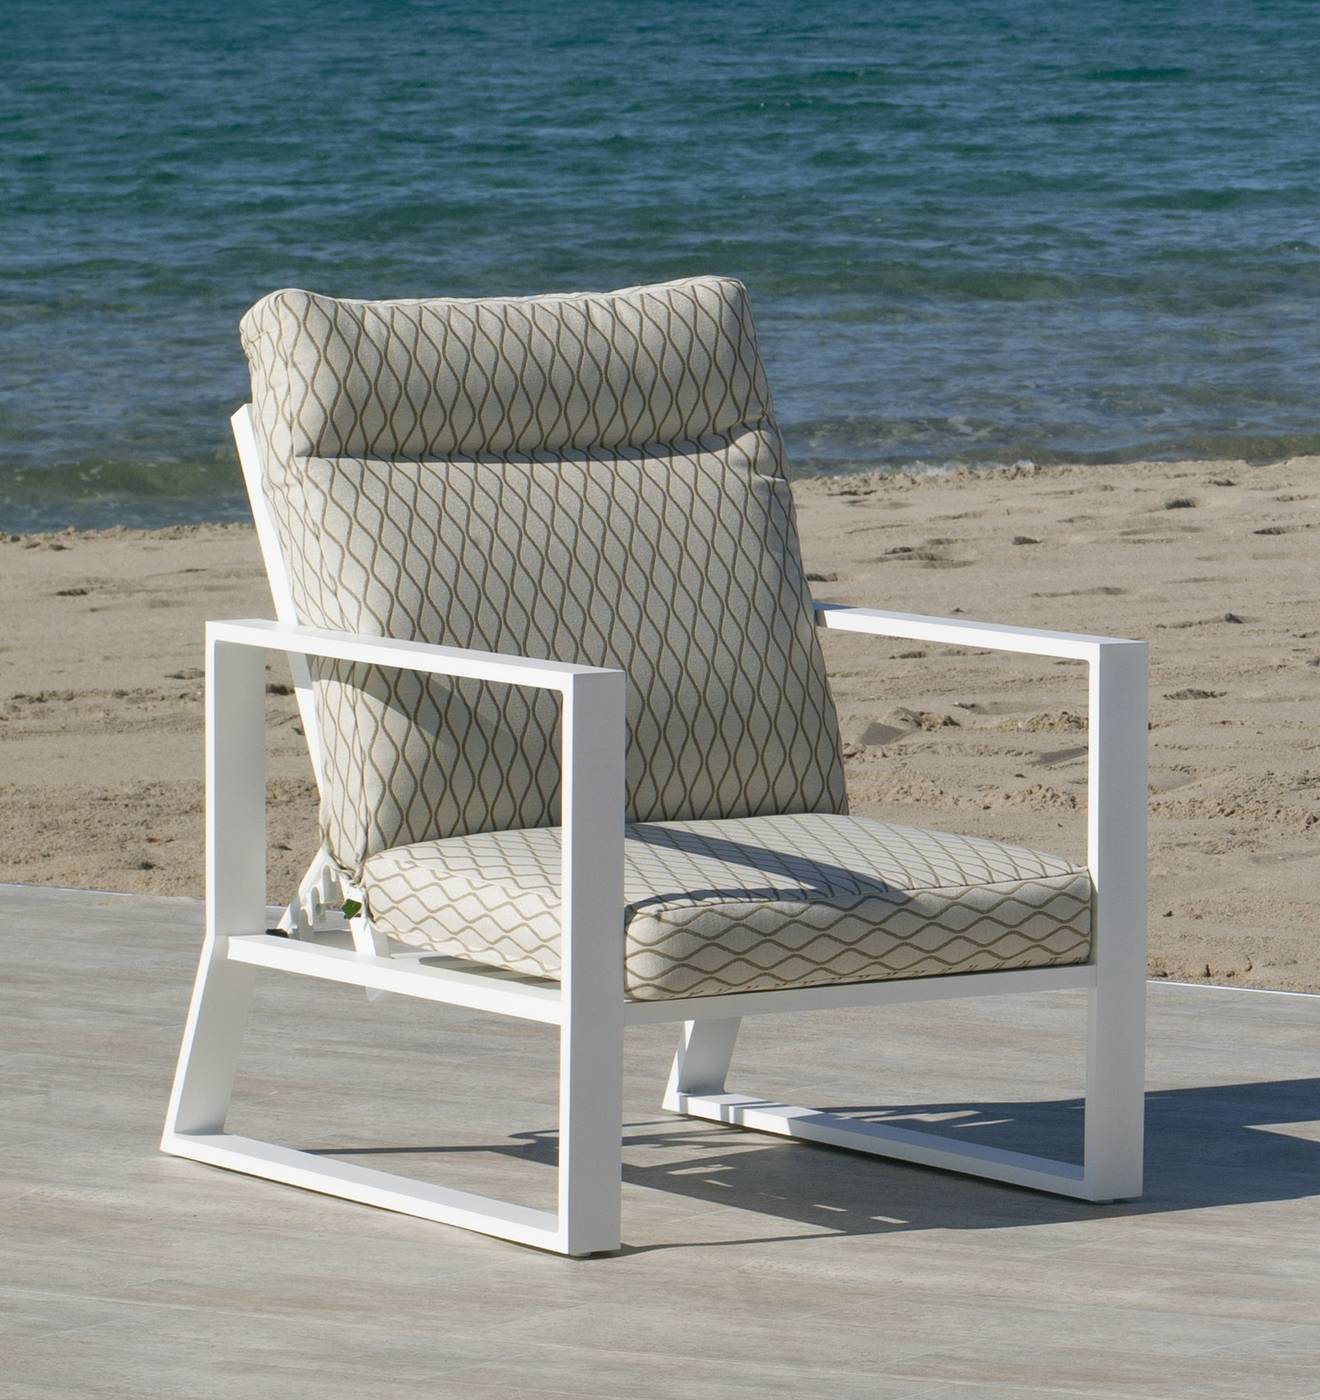 Set Aluminio Bolonia-640 - Conjunto aluminio: sofá 2 plazas + 2 sillones + mesa de centro + 2 taburetes + cojines. Respaldos reclinables. Colores: blanco, antracita o bronce.